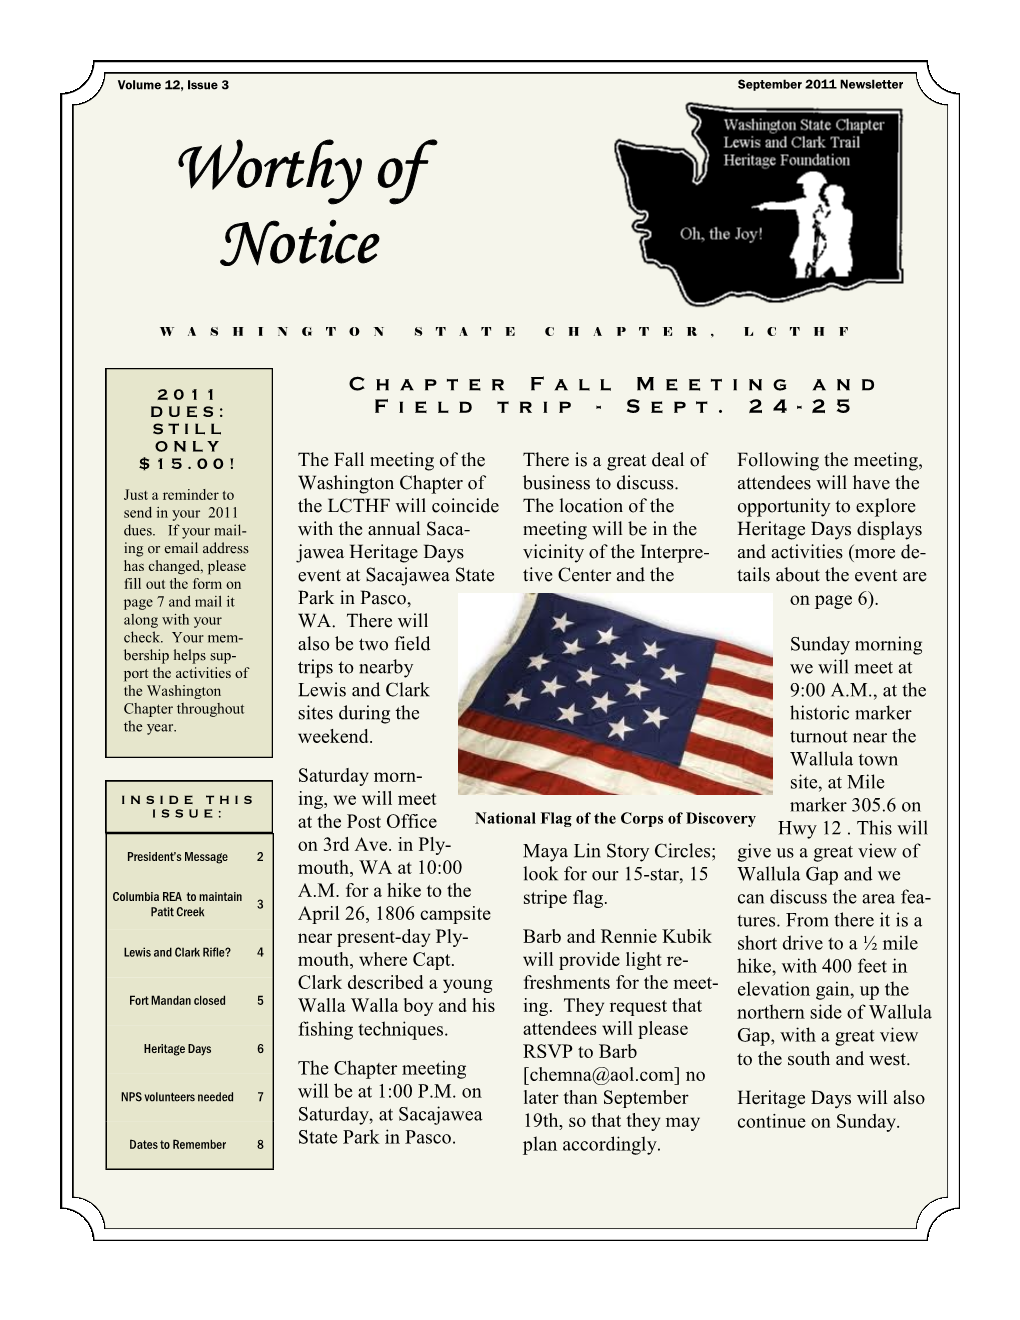 September 2011 Newsletter Worthy of Notice